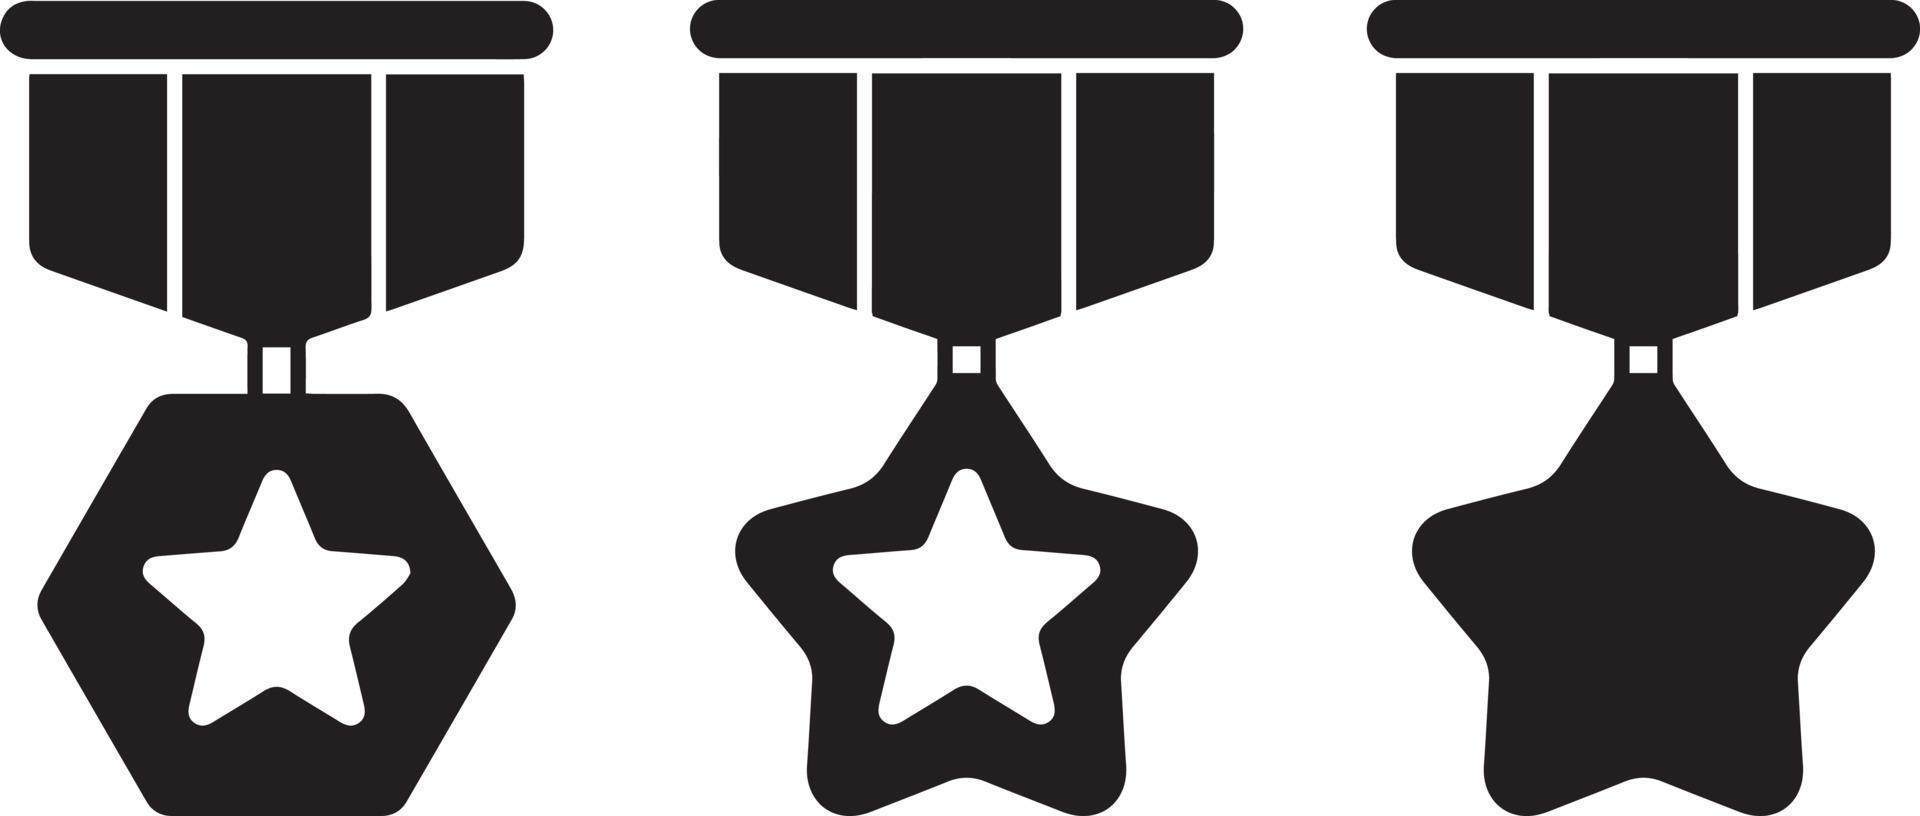 badge correct mark icon set vector